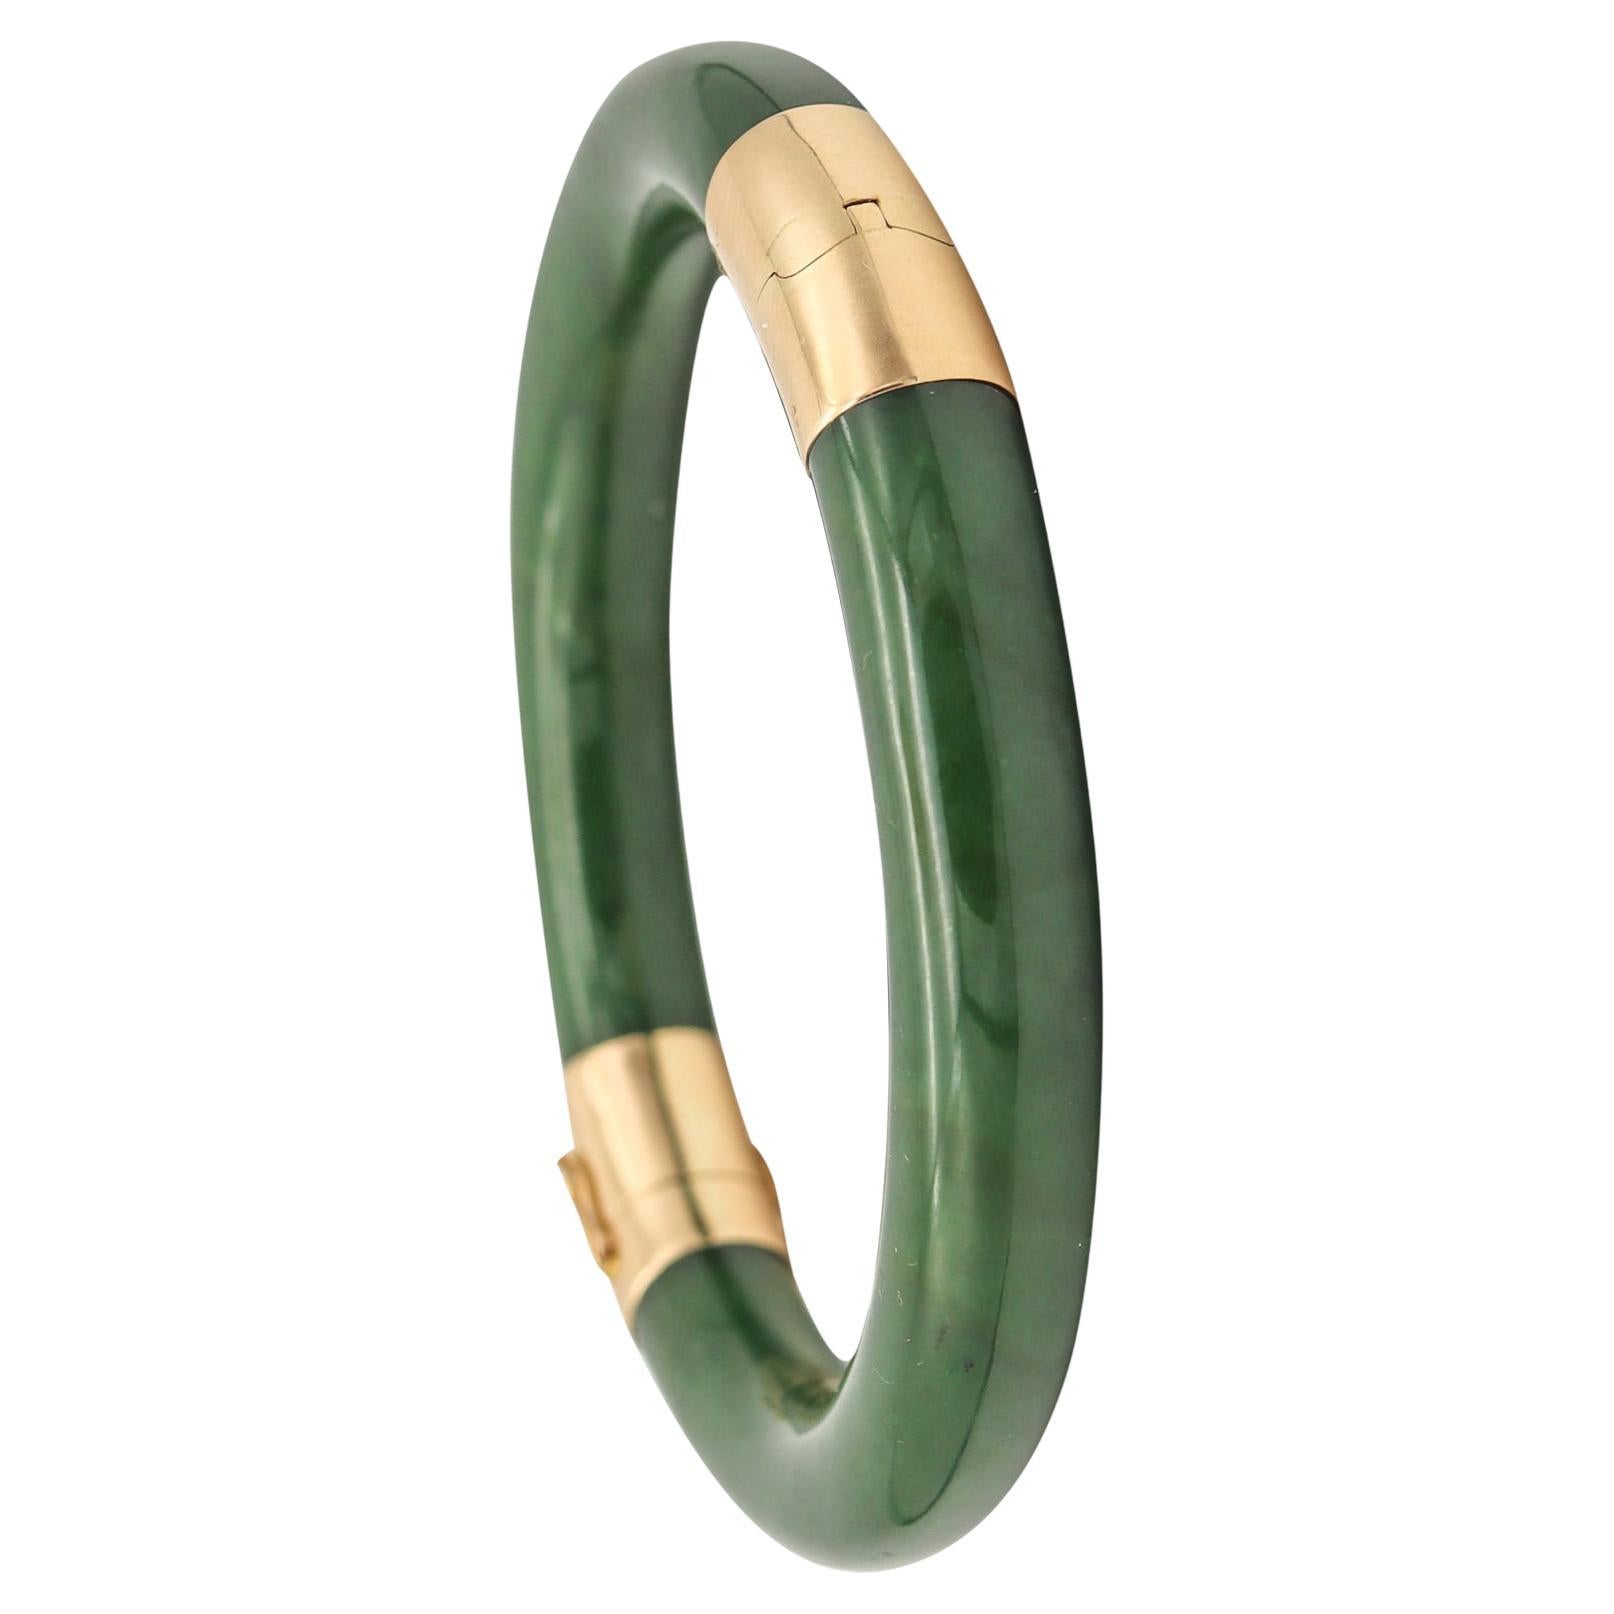 Gumps San Francisco Nephrite Green Jade Bangle Bracelet Mounted 14Kt Yellow Gold For Sale